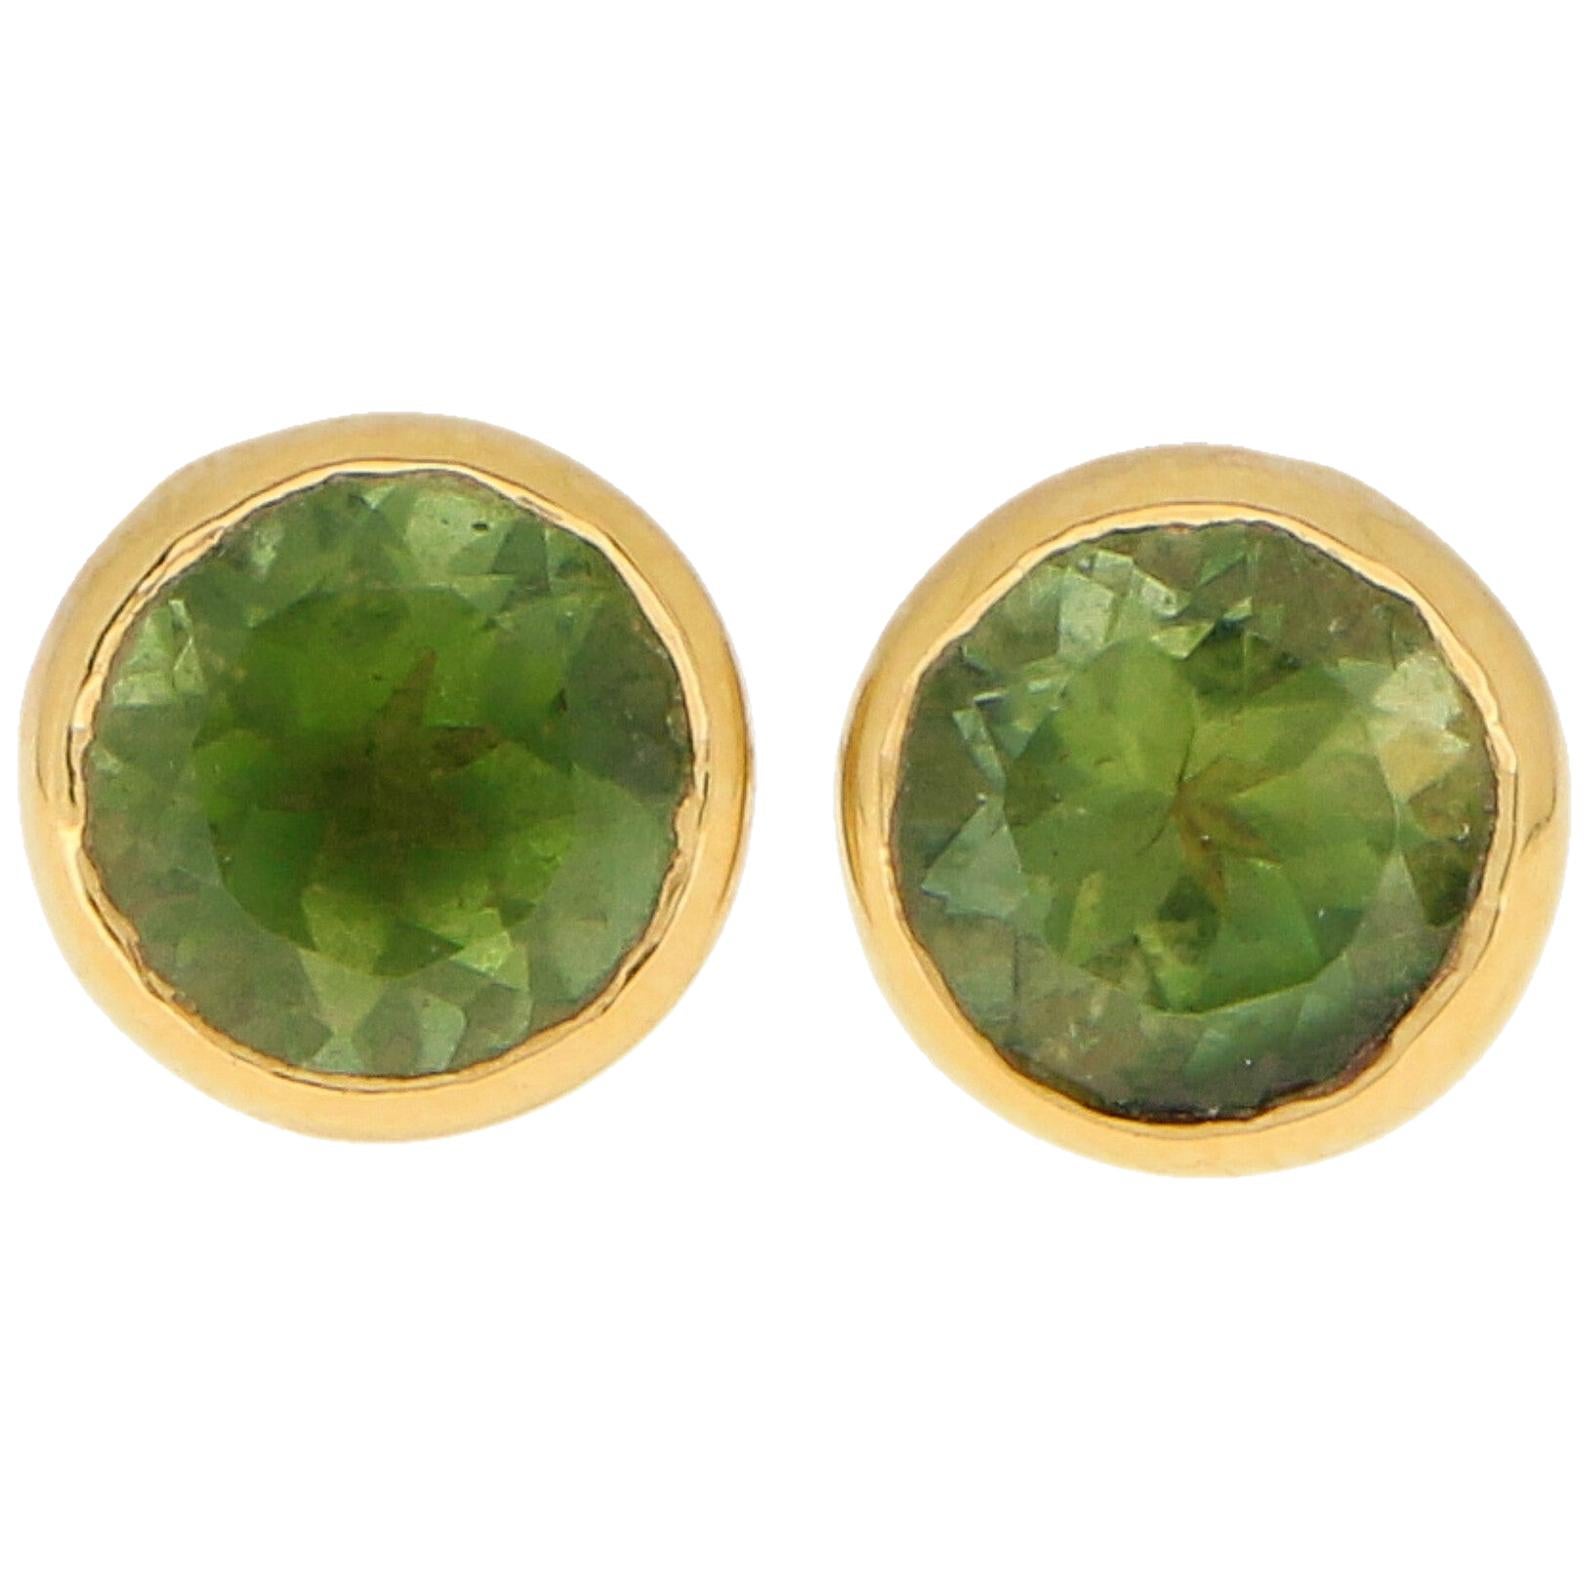 Green Peridot Stud Earrings Set in 18 Karat Yellow Gold